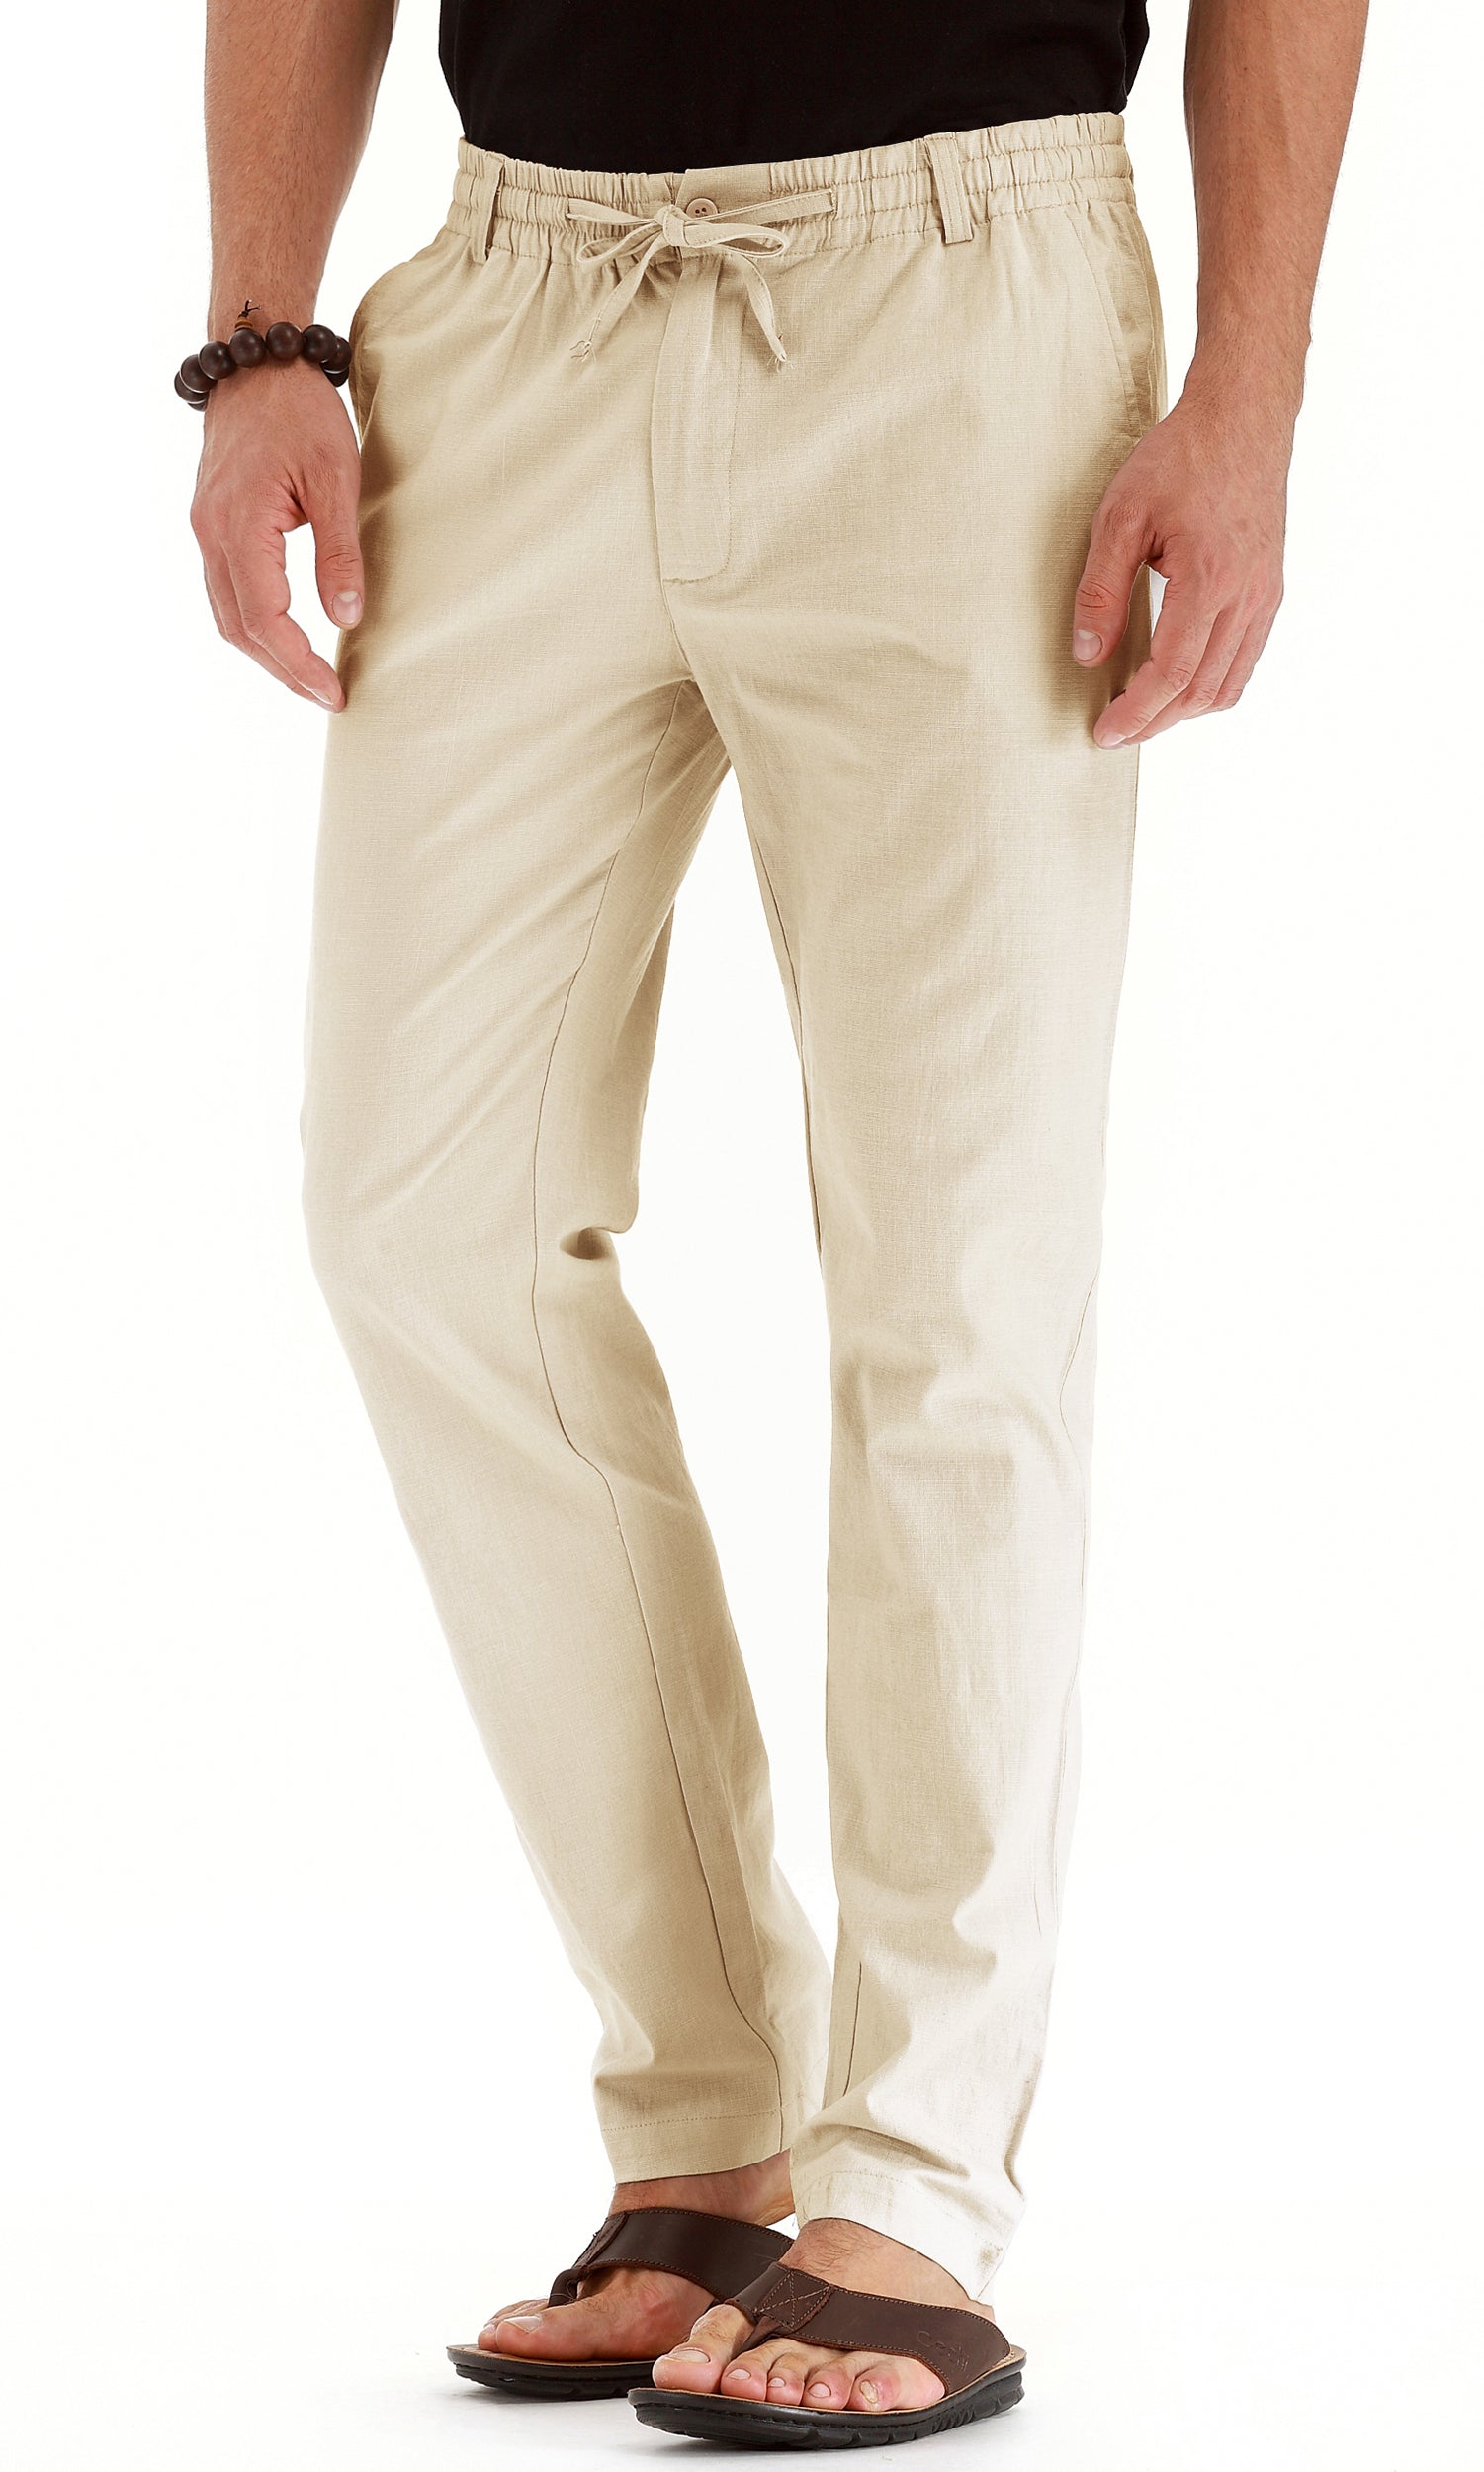 Stylish Summer Dress Pants for Work - Corporette.com